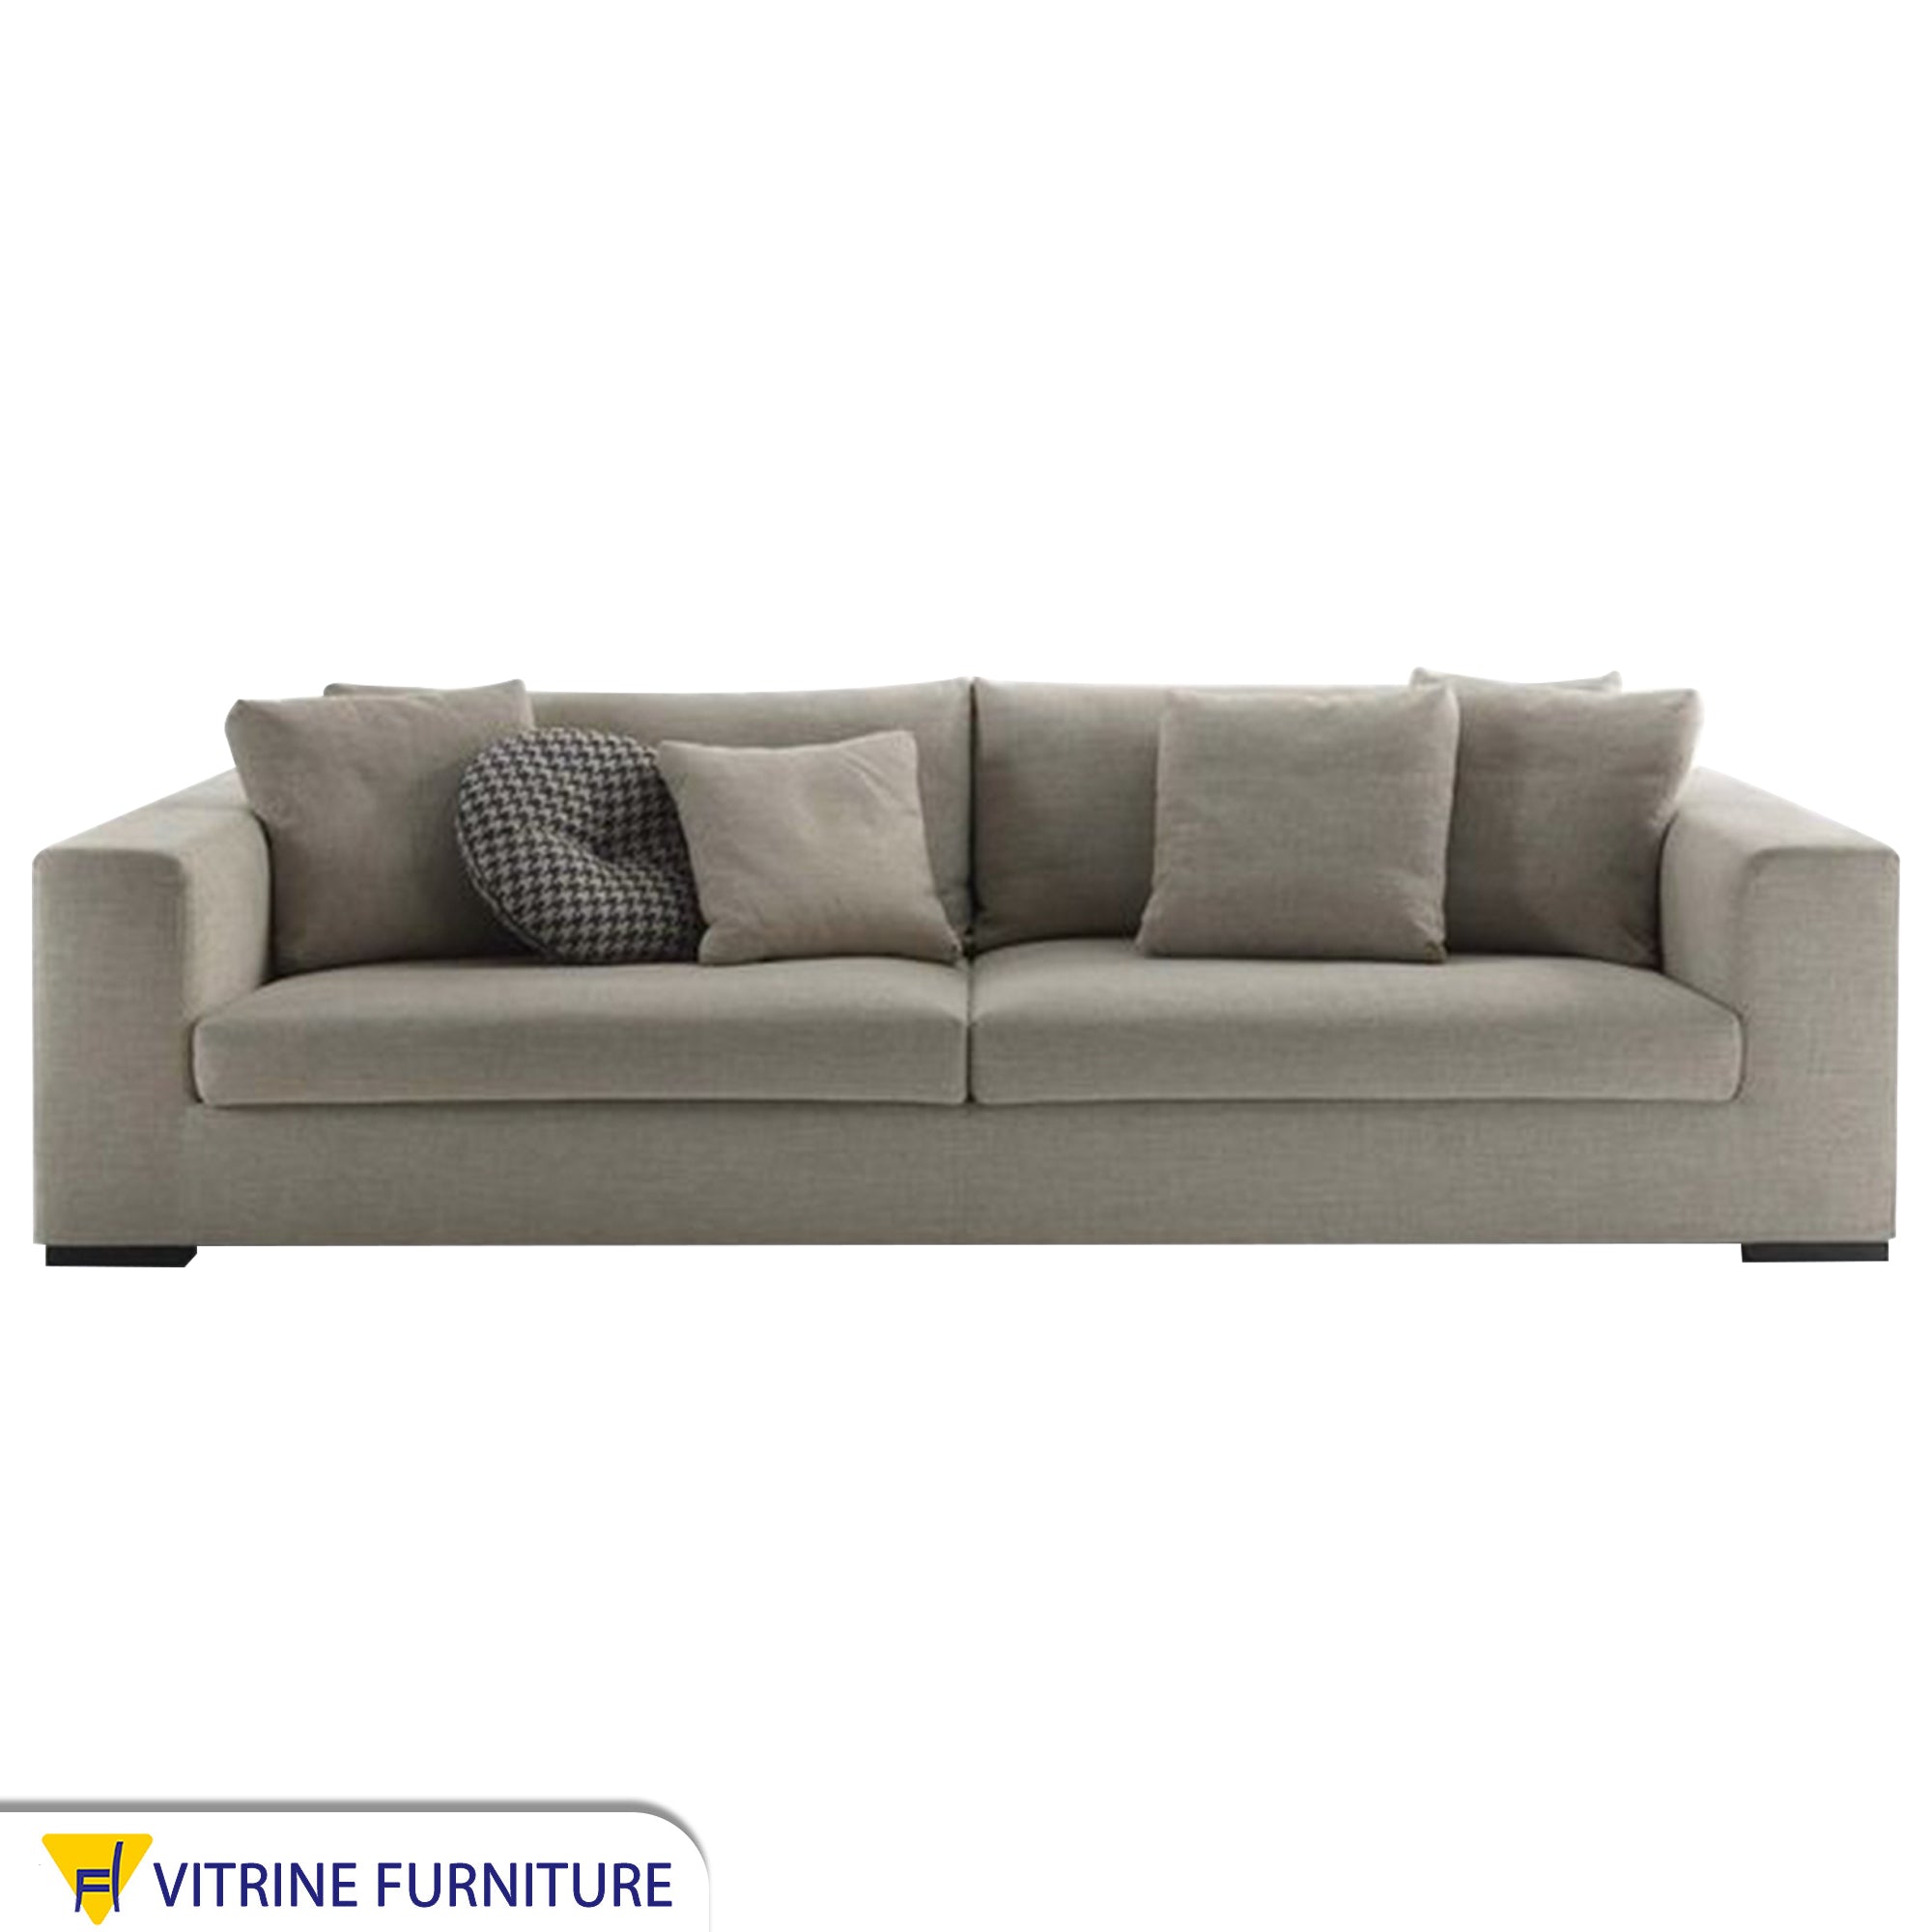 A cafe sofa with elegant cushions